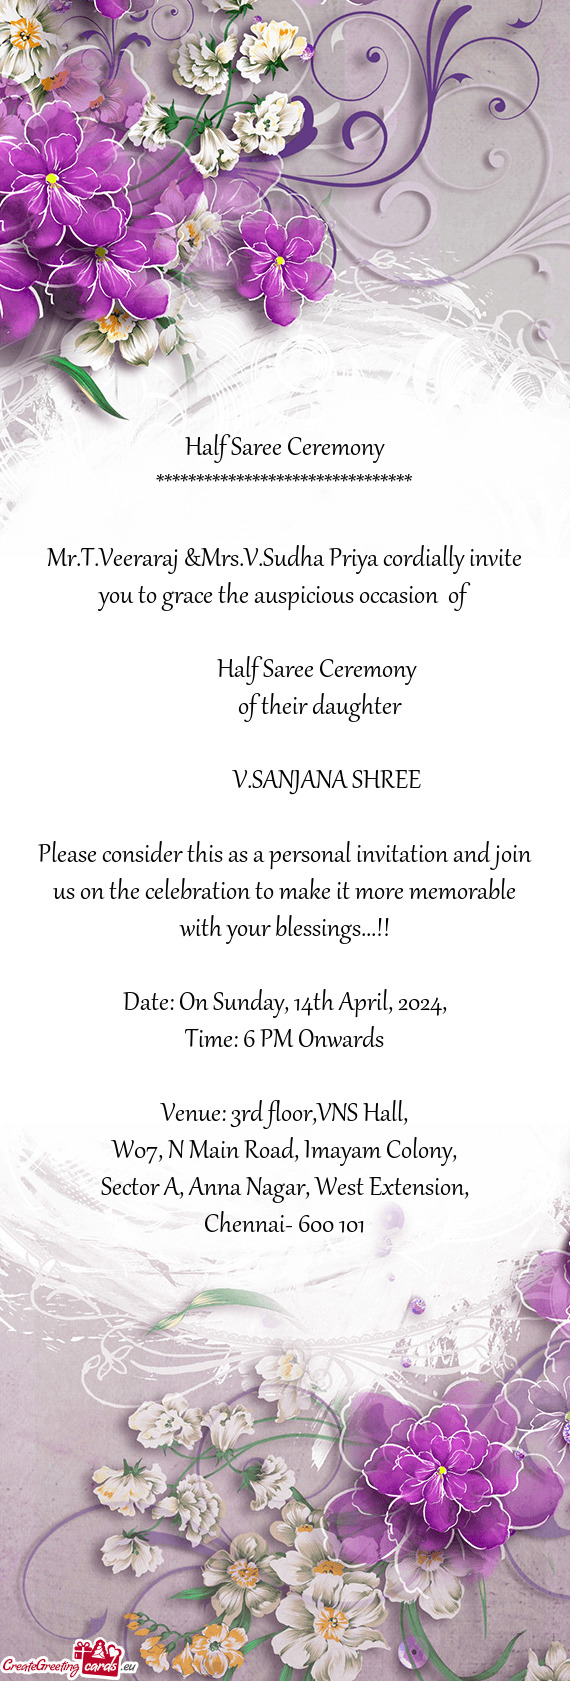 Mr.T.Veeraraj &Mrs.V.Sudha Priya cordially invite you to grace the auspicious occasion of